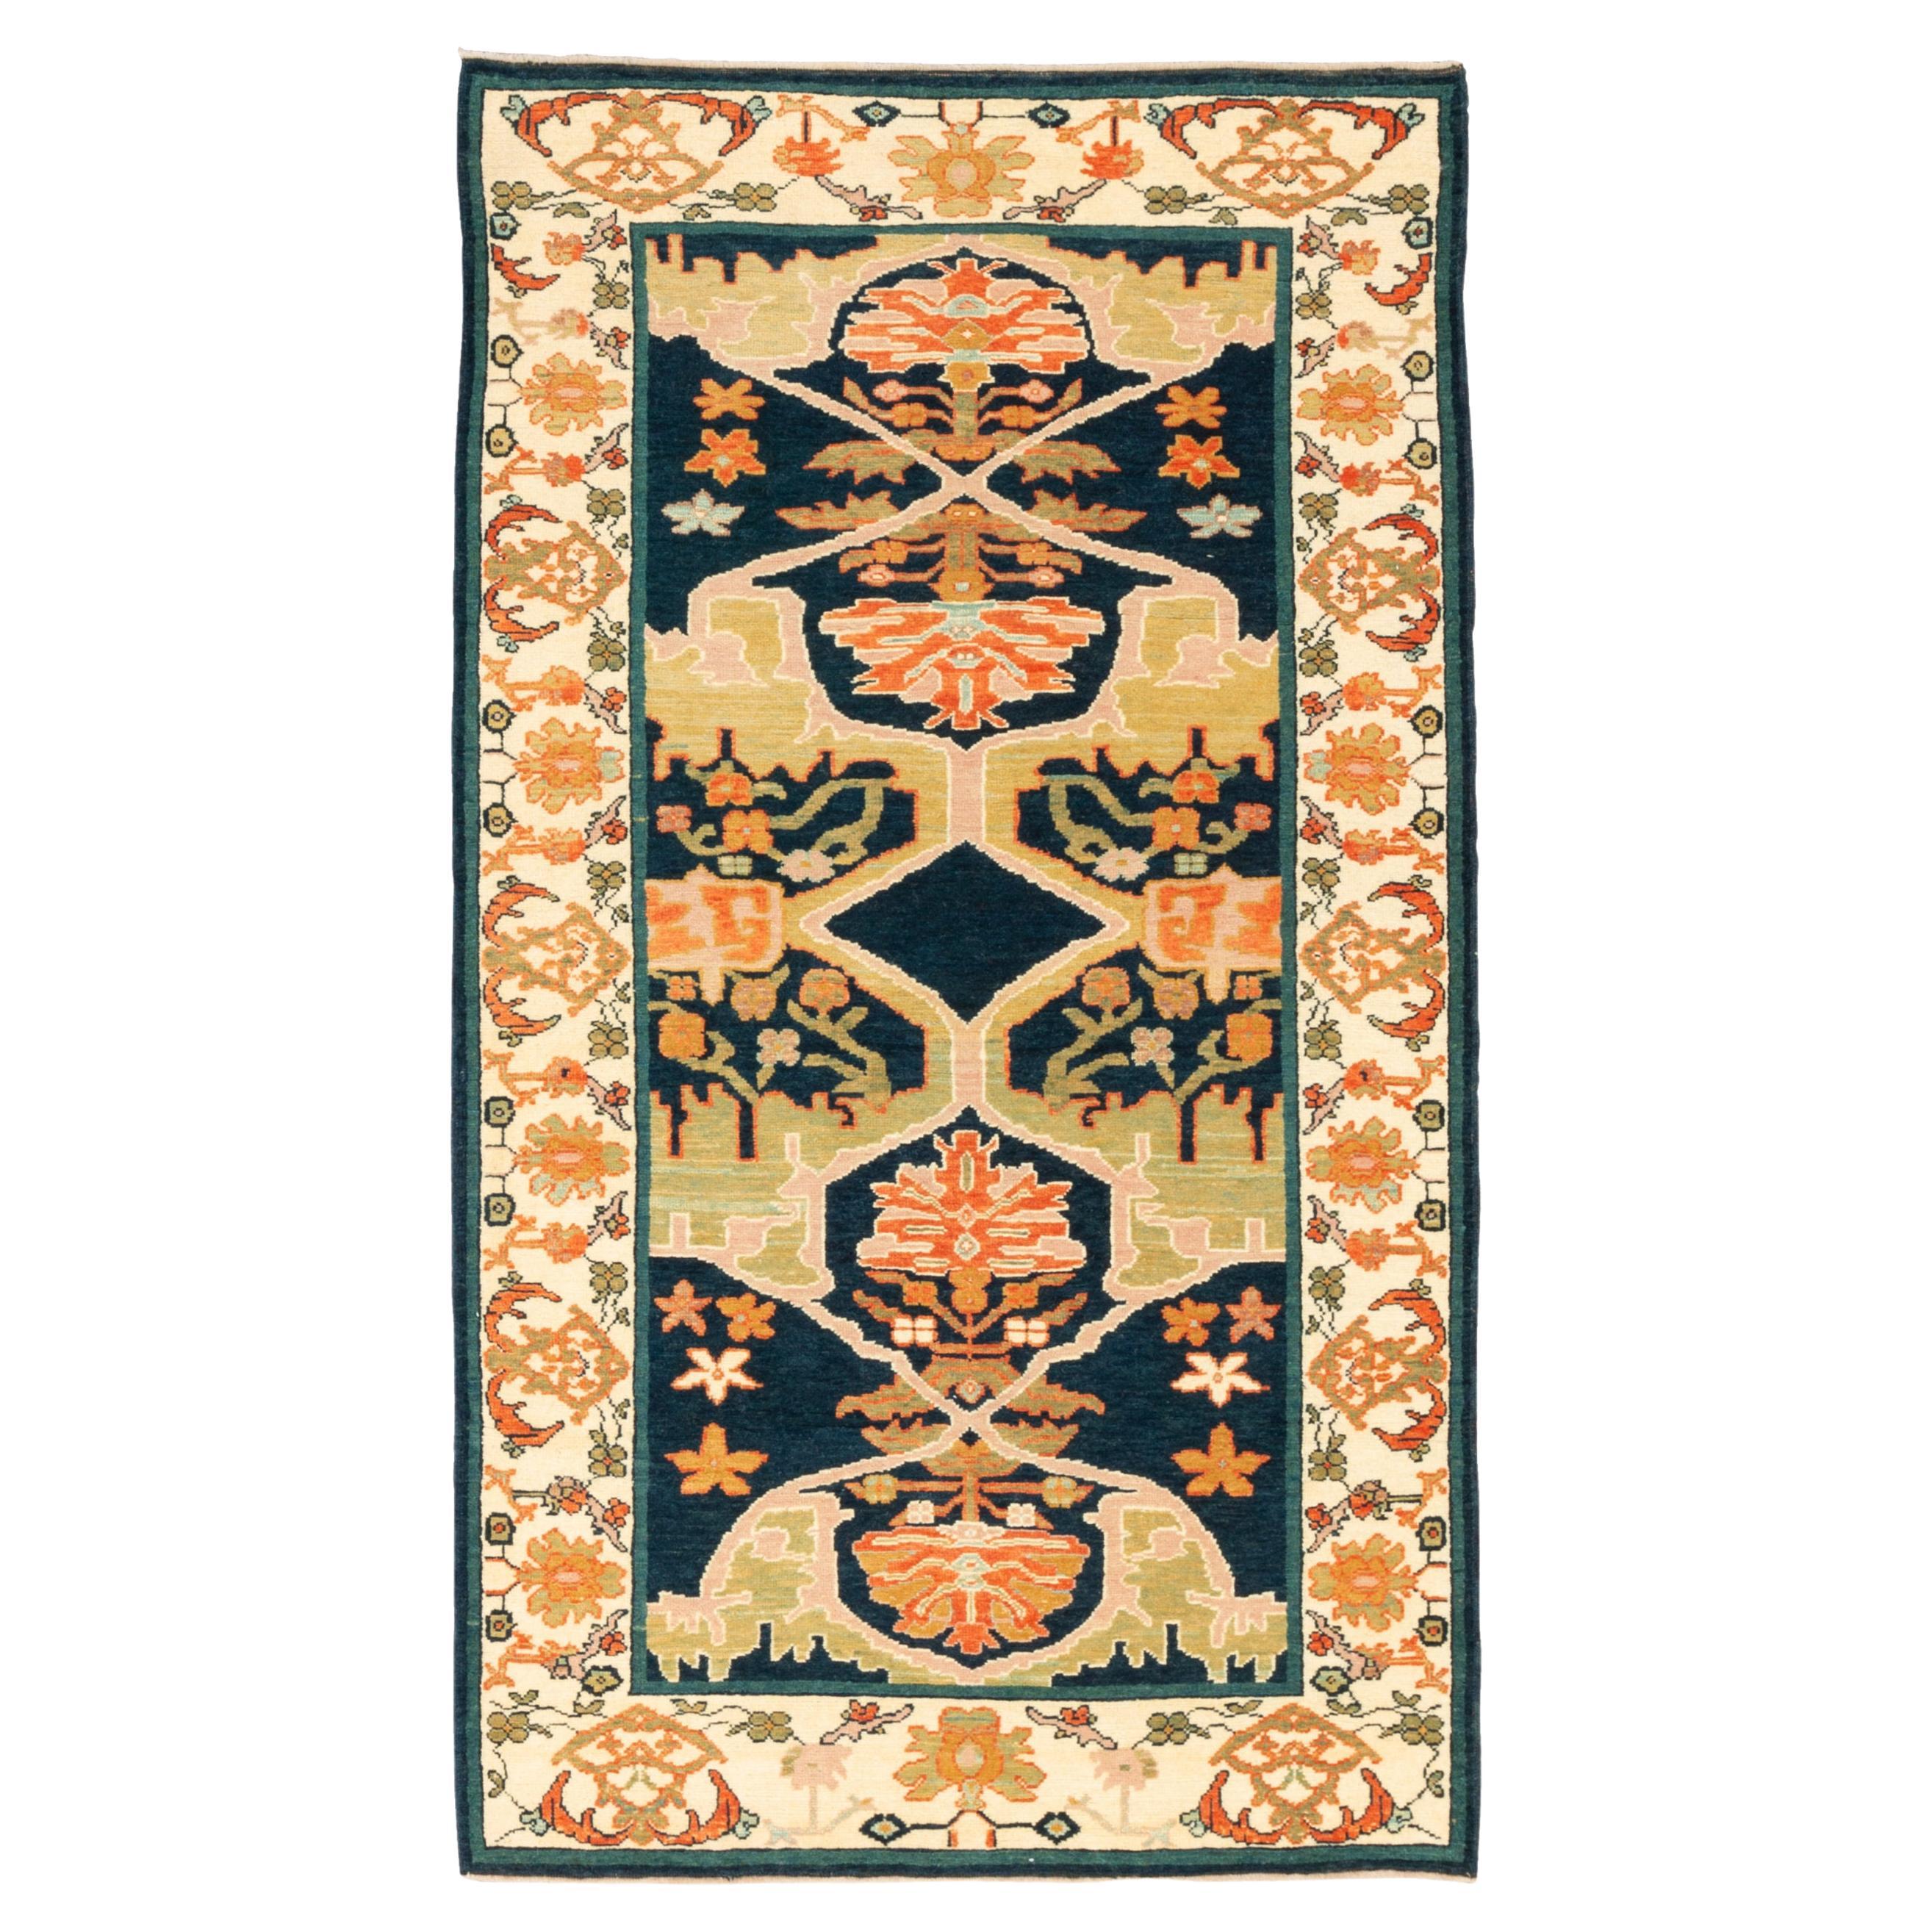 Ararat Rugs Gerous Bidjar Wagireh Rug Antique Persian Design Carpet Natural Dyed